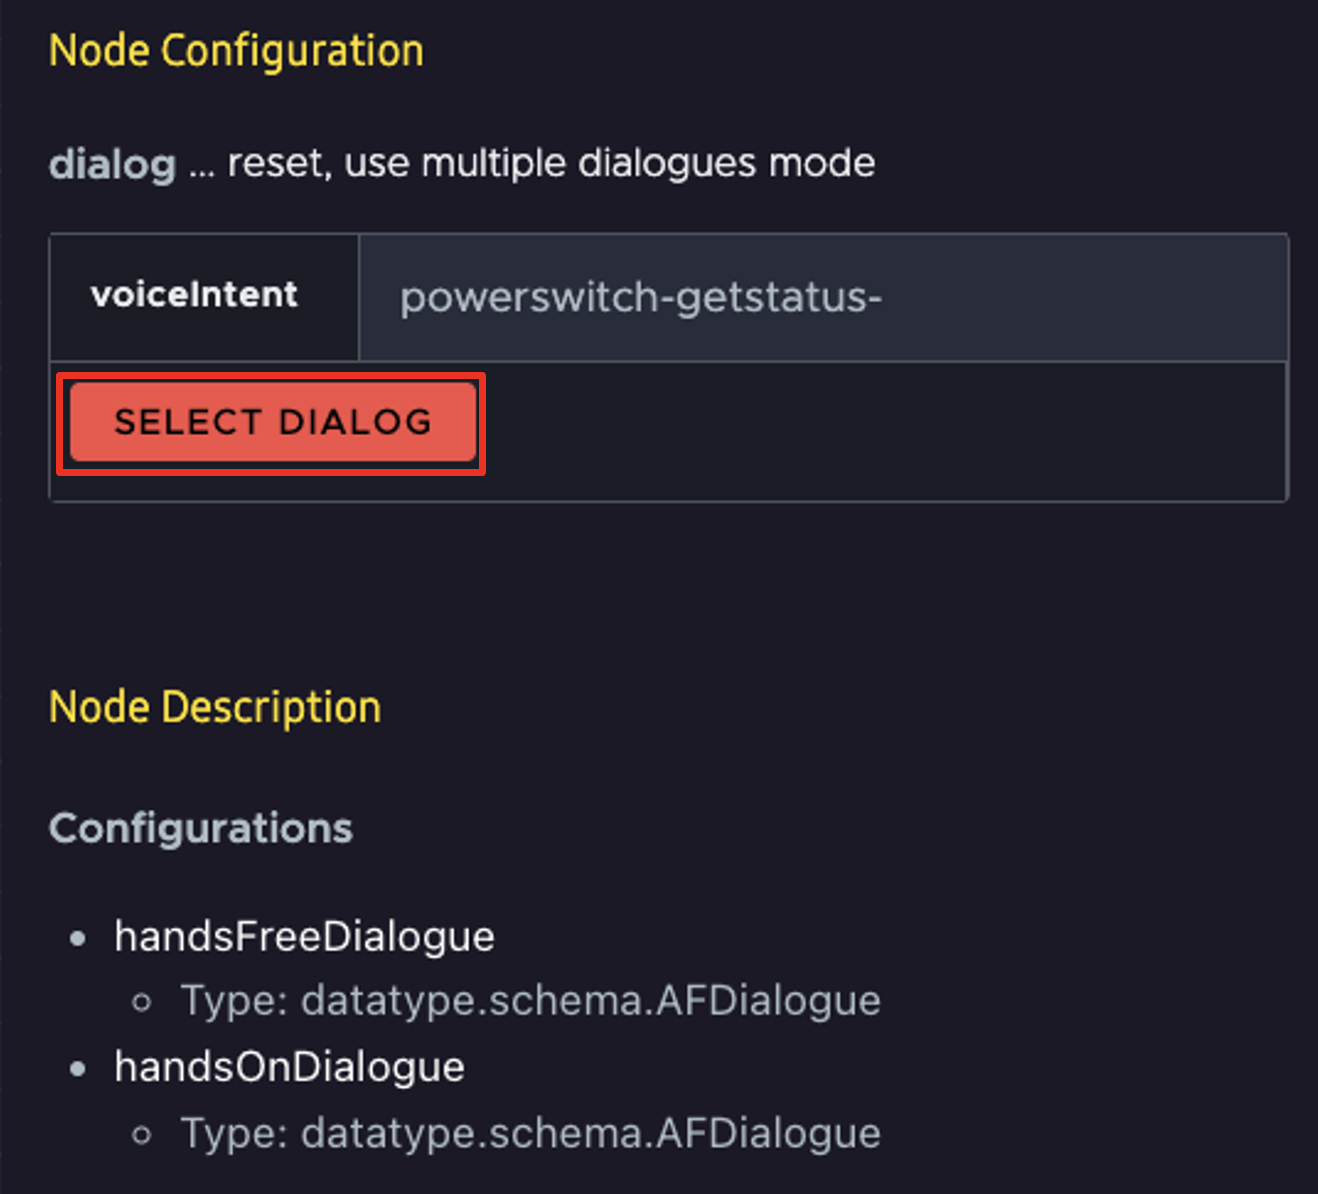 Single Dialog Mode